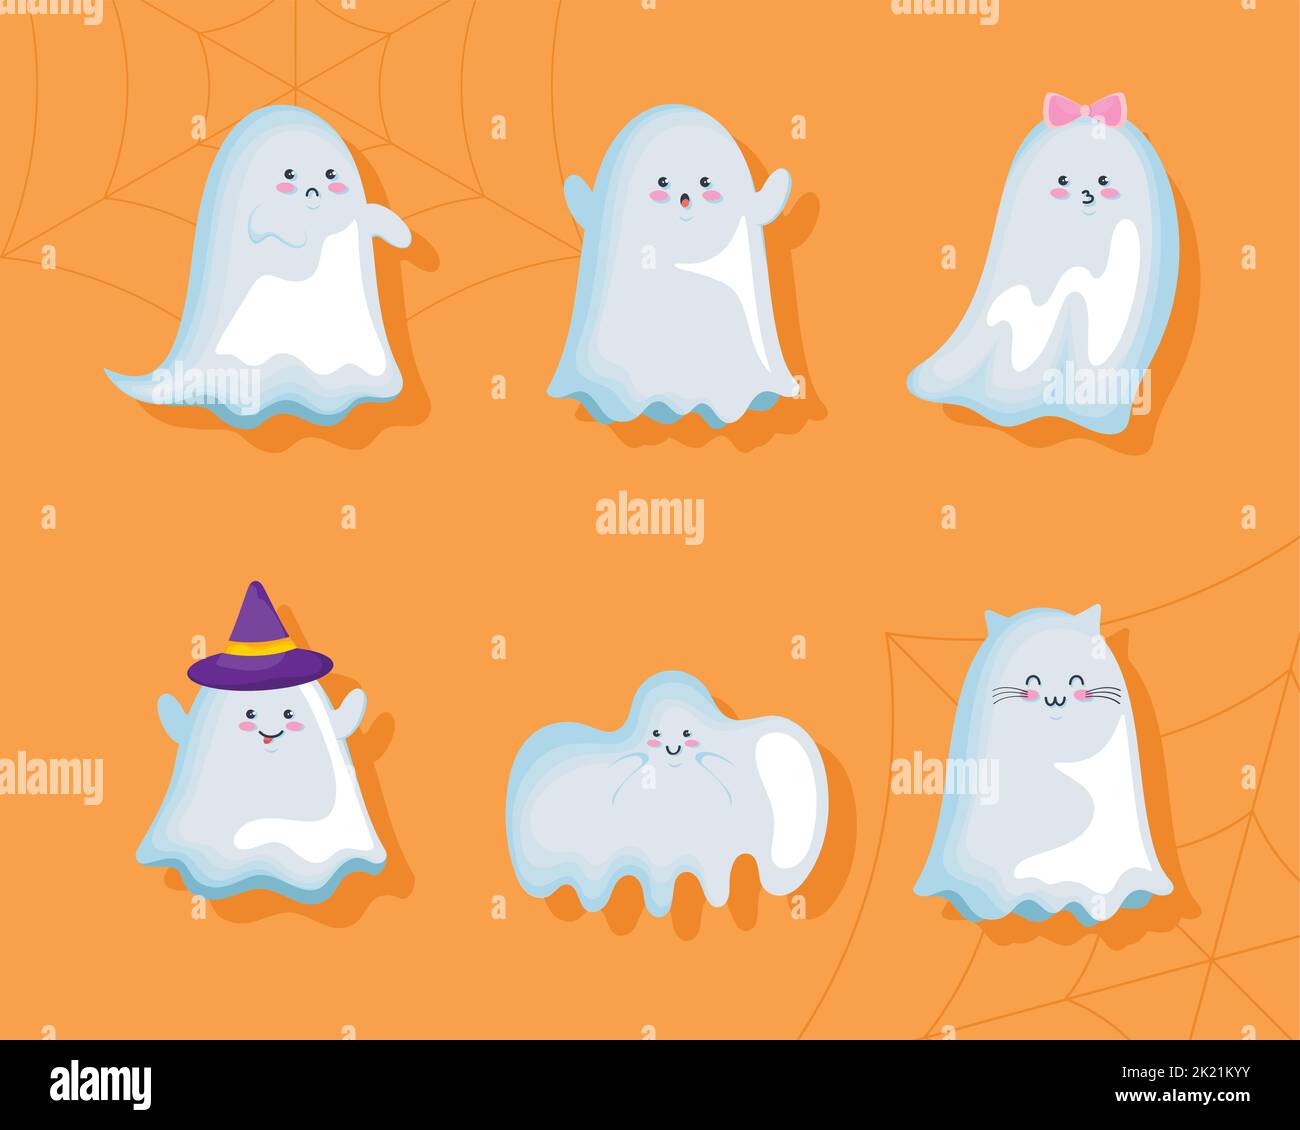 six halloween ghosts characters Stock Vector